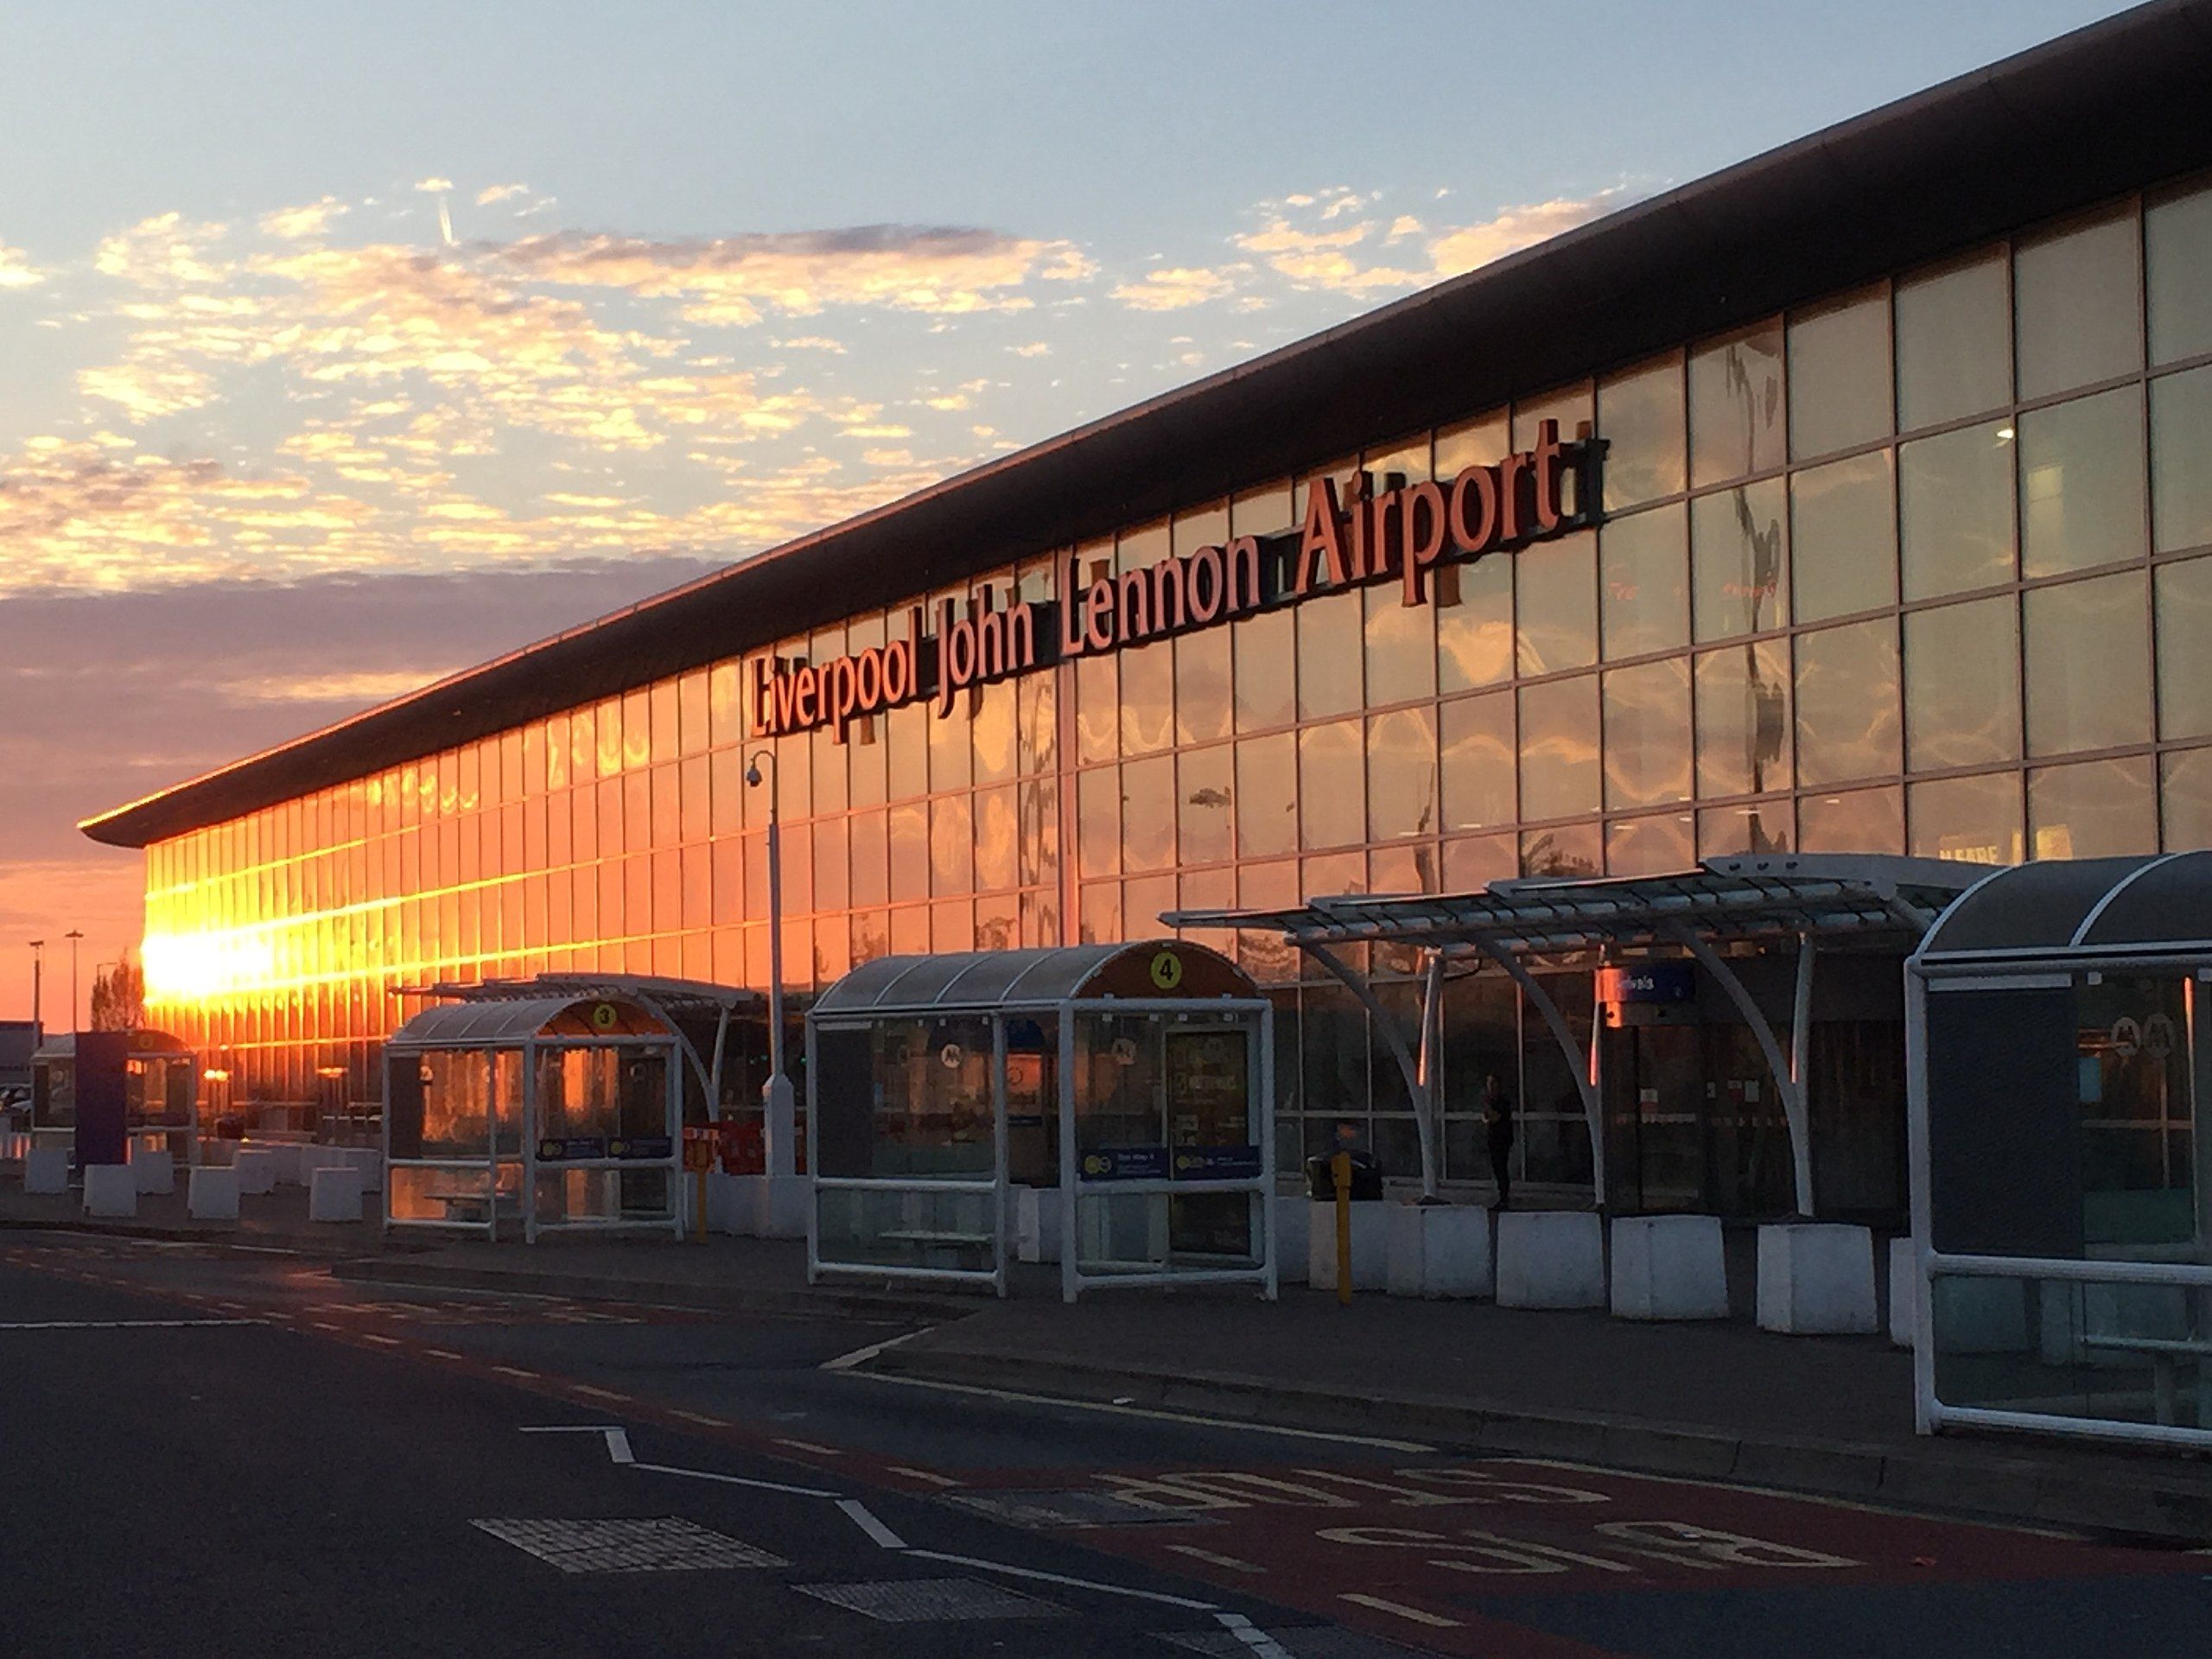 Liverpool Airport Terminal Building At Sunset